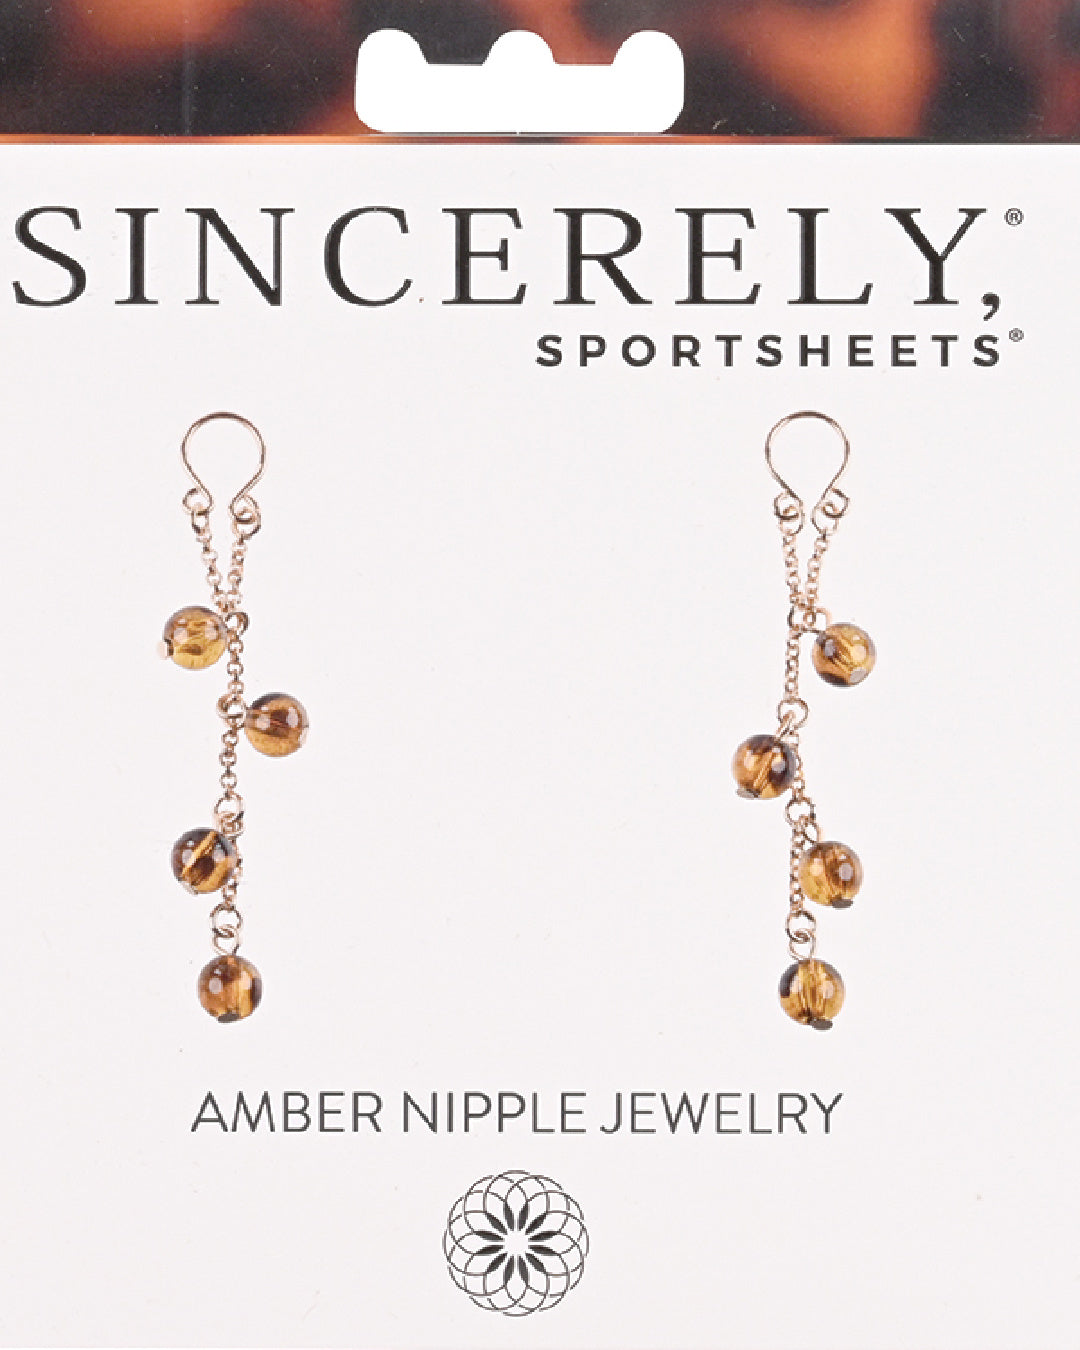 Sincerely Amber Nipple Jewelry box 